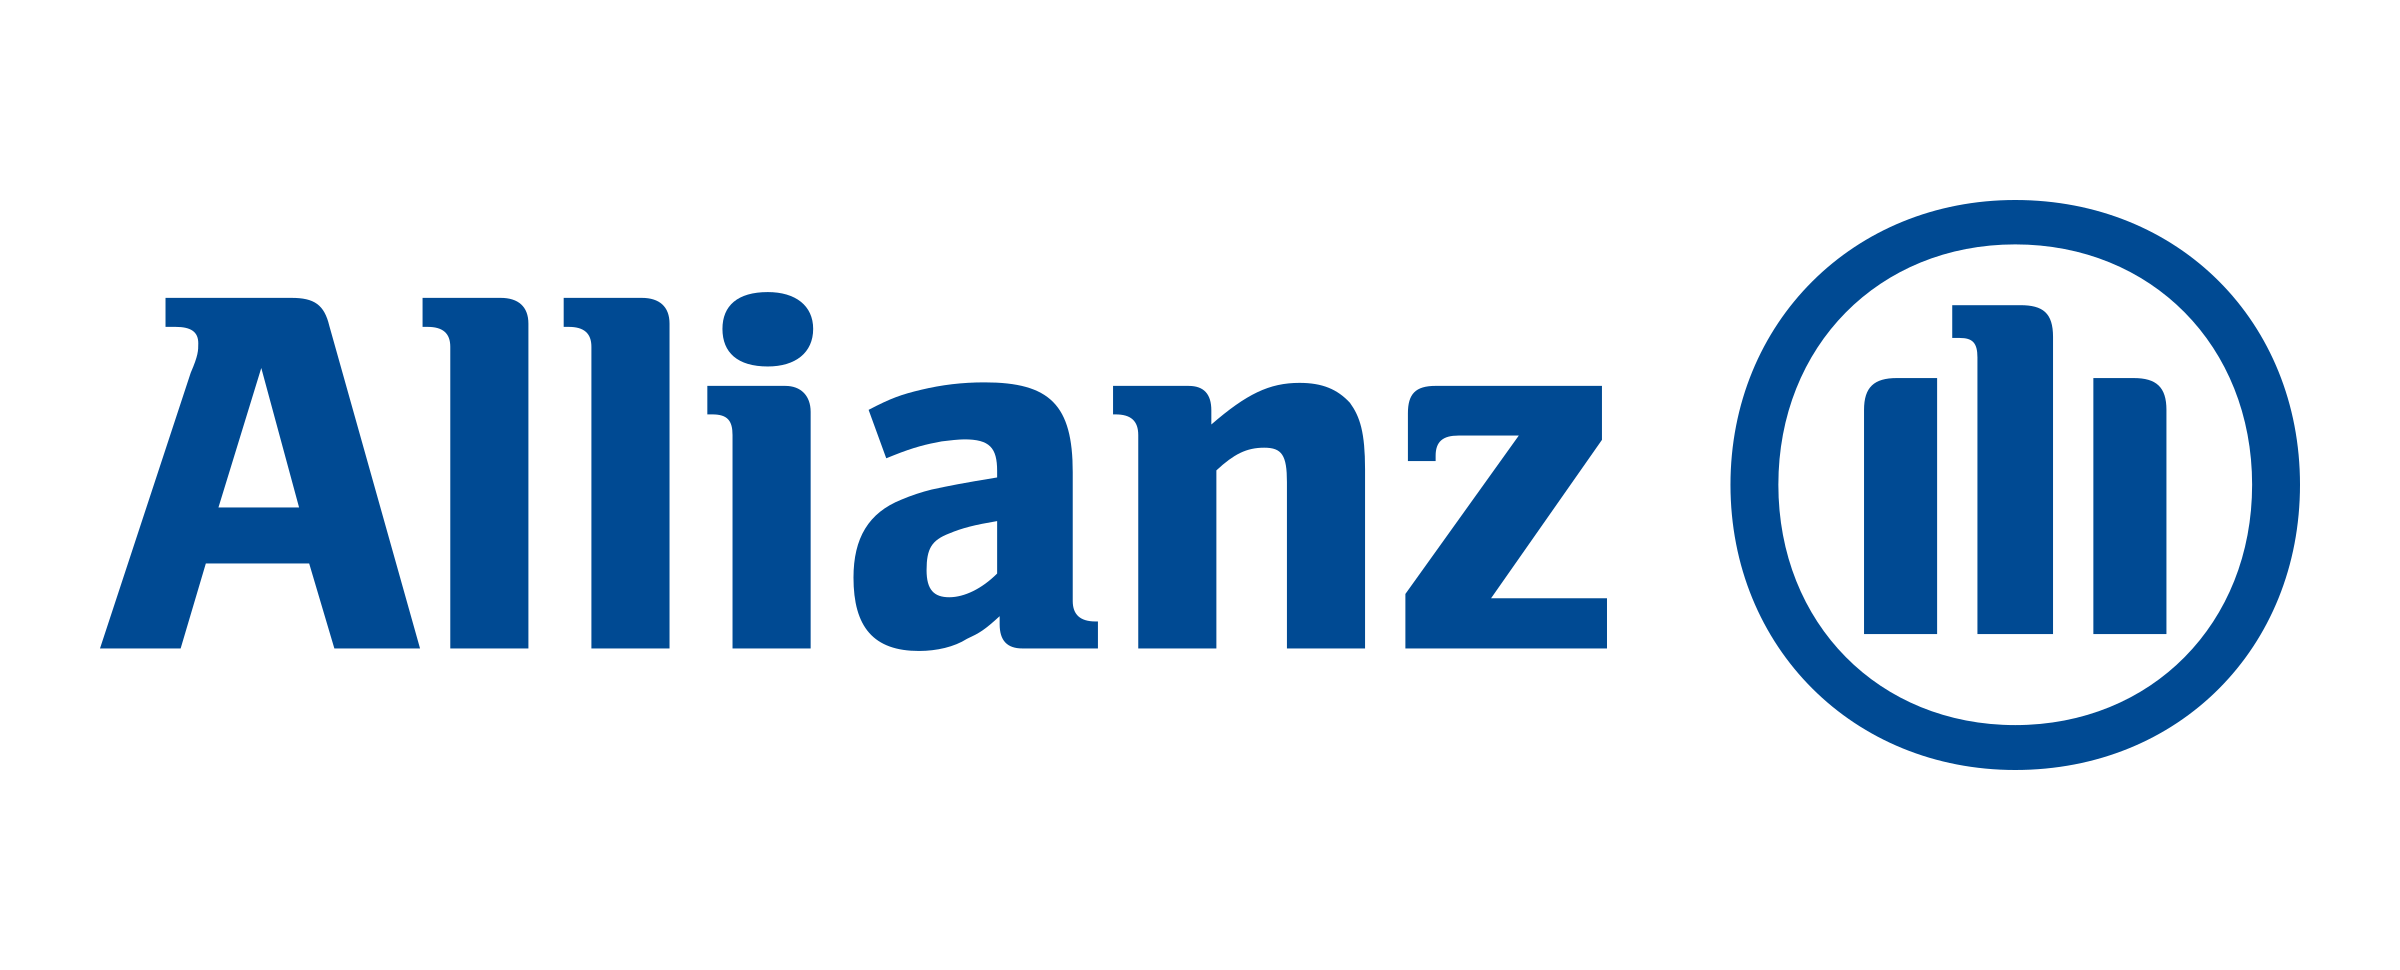 allianz-logo-png-transparent.png